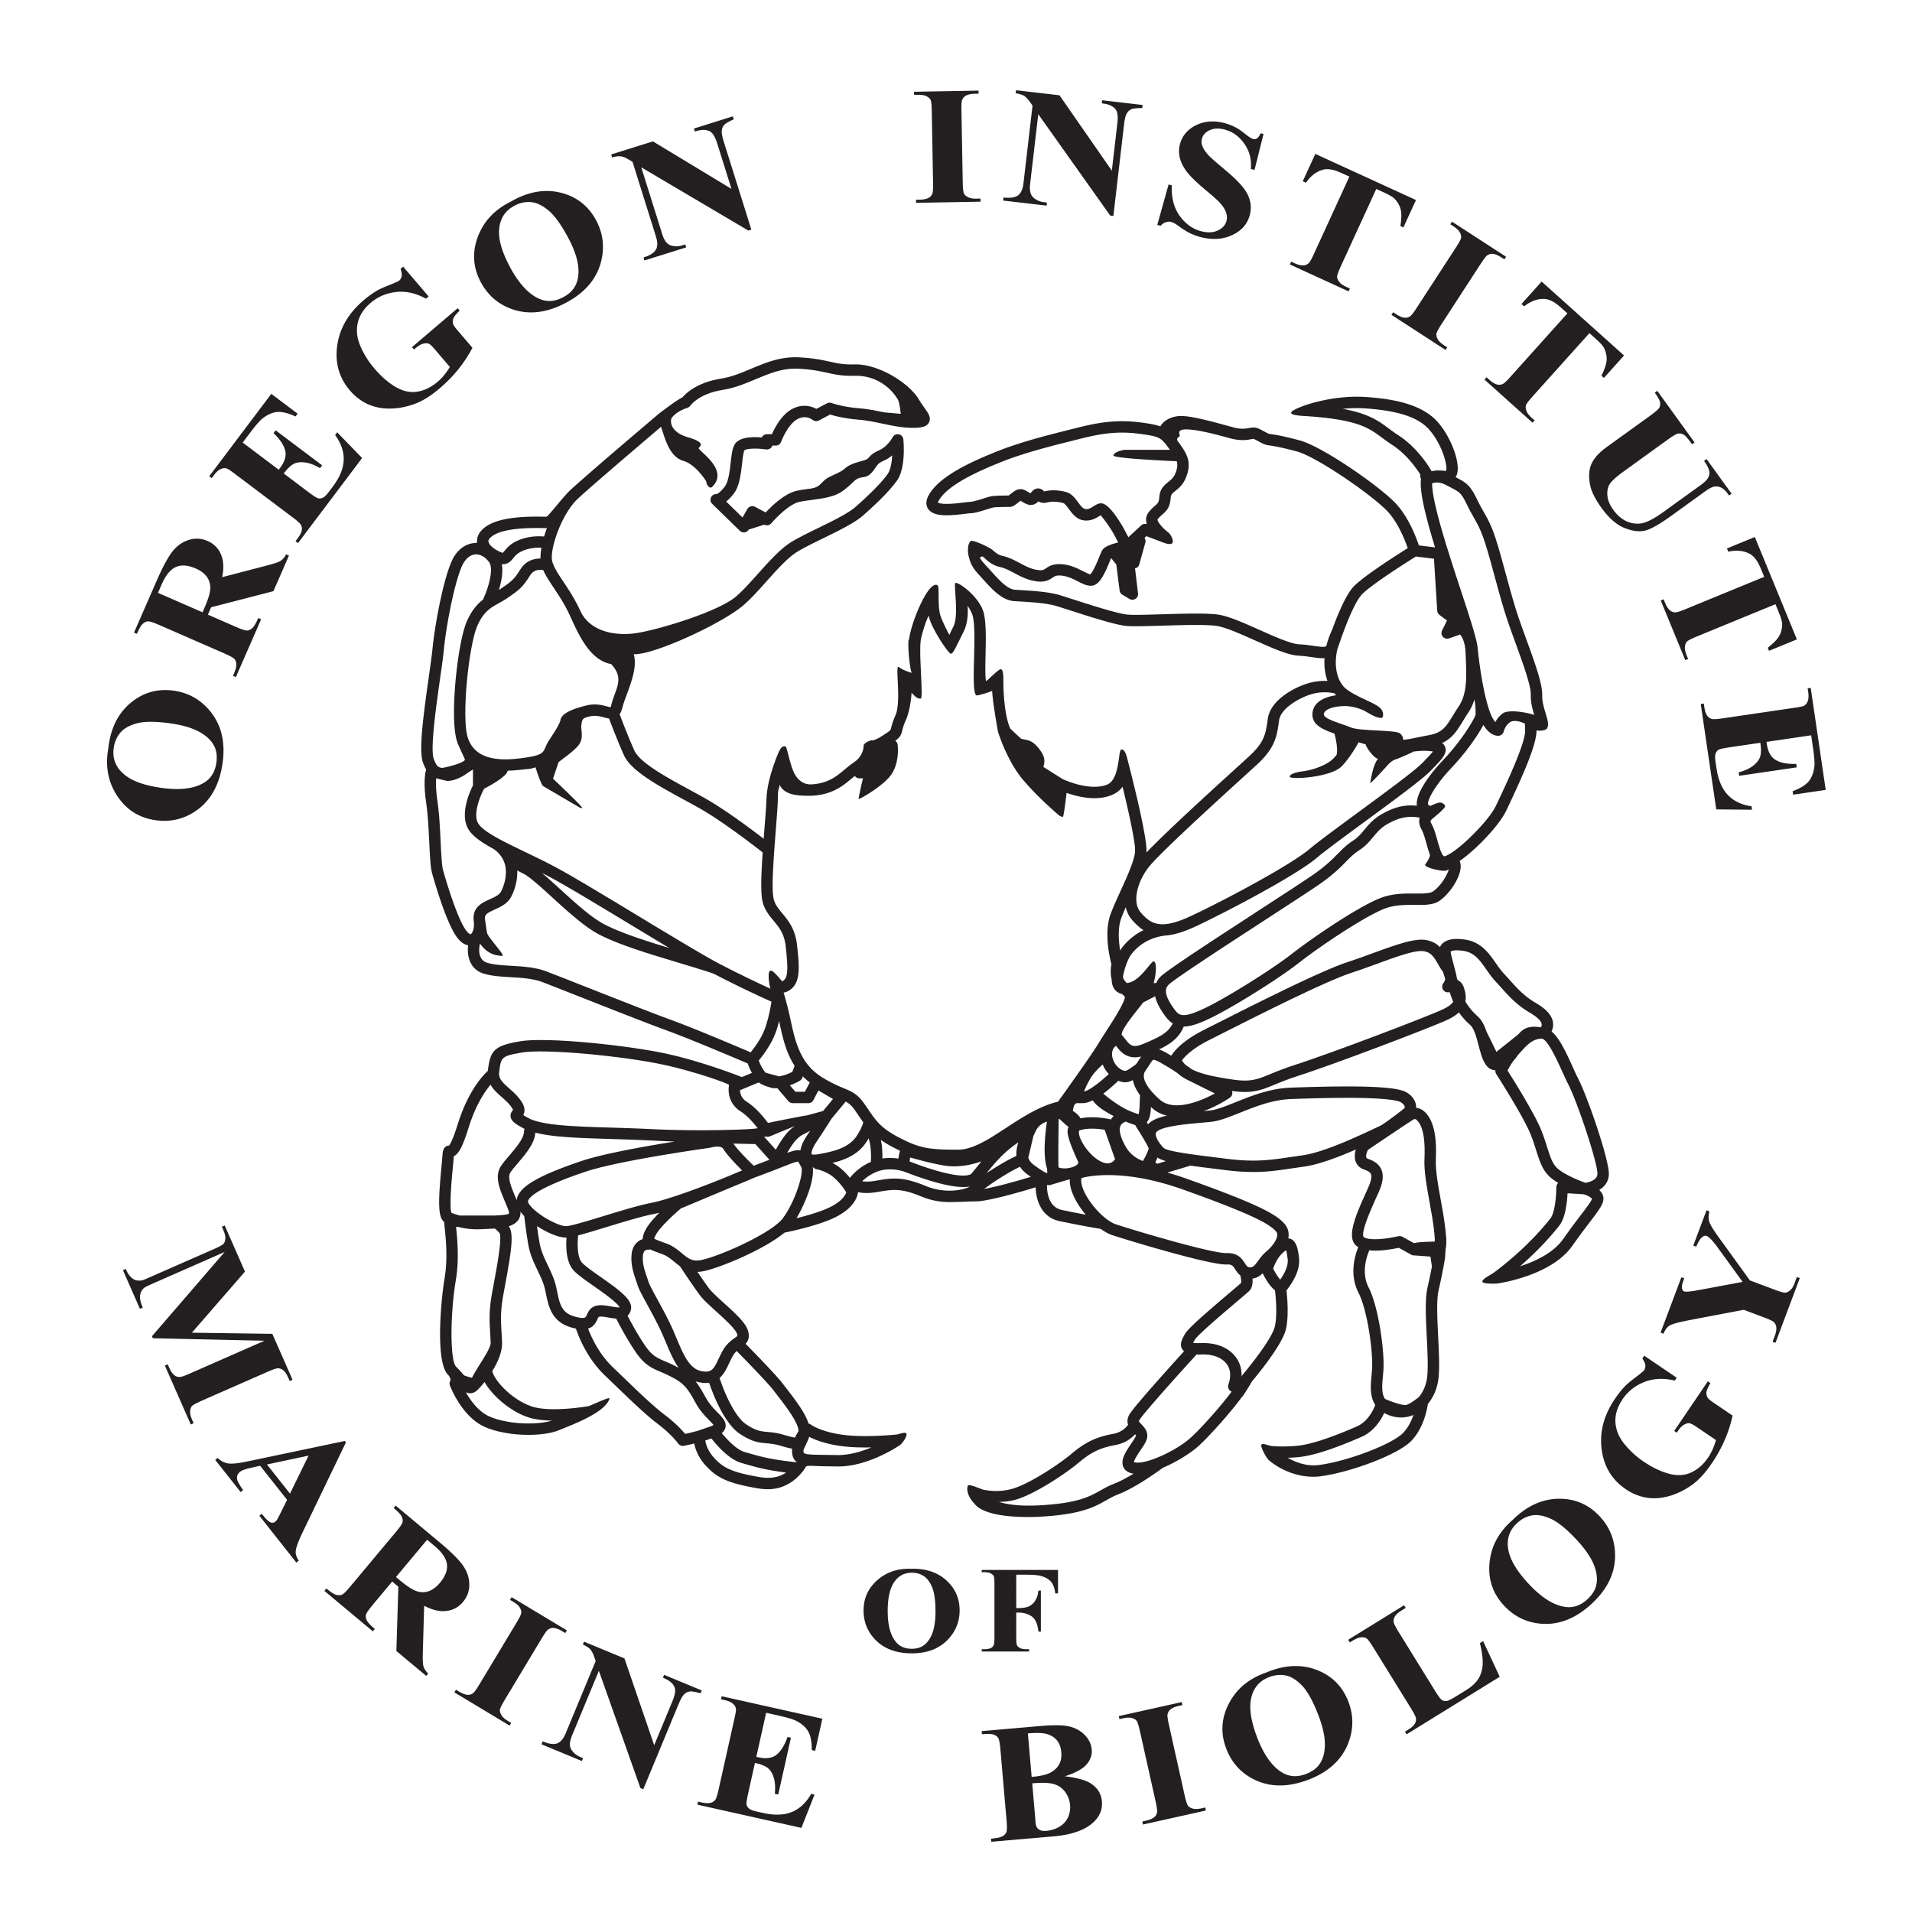 Oregon Institute of Marine Biology